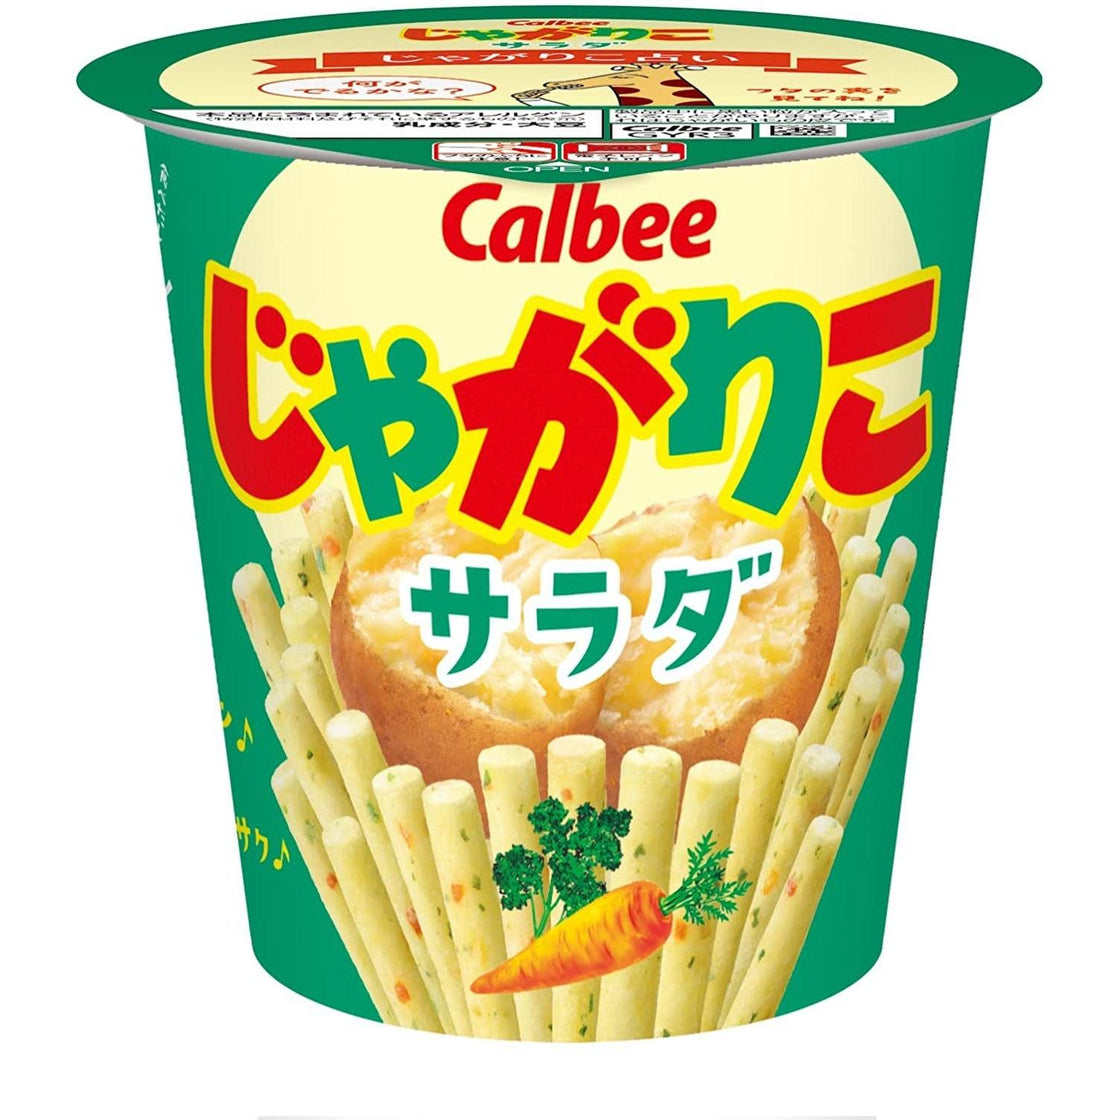 Calbee-Jagarico-Salad-Potato-Sticks-57g-Japanese-Taste.jpg